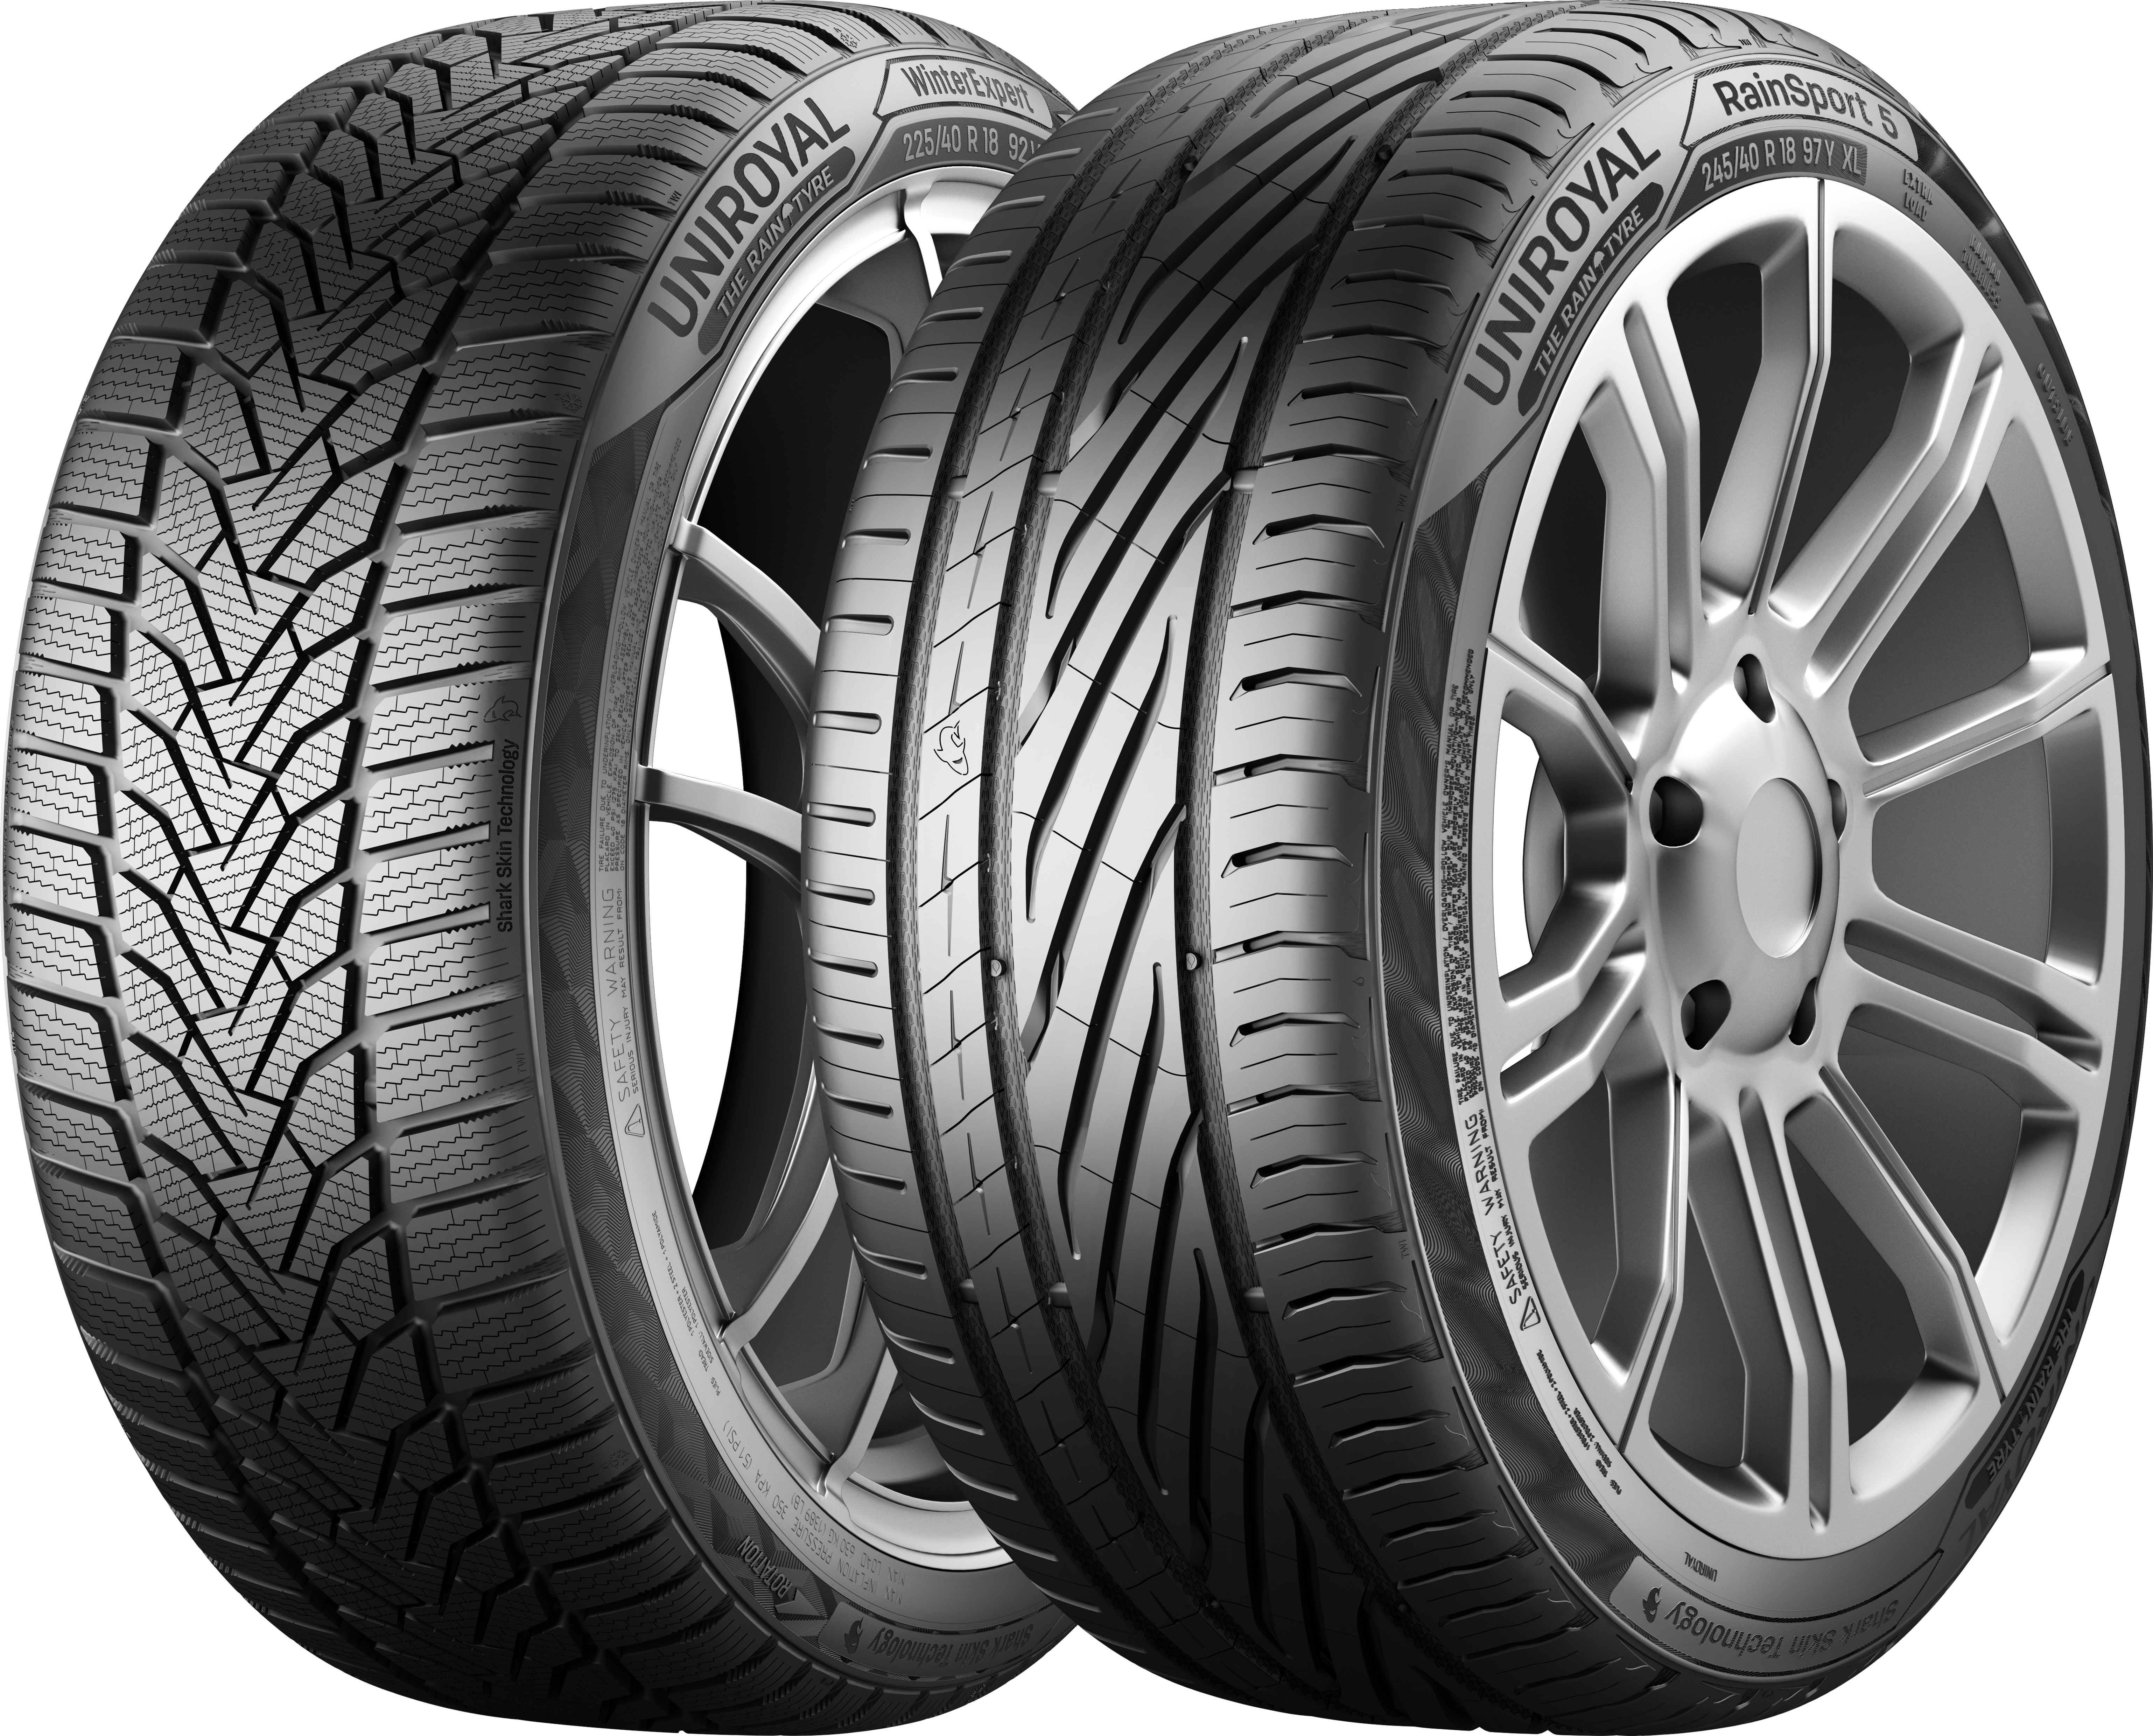 The Uniroyal WinterExpert winter tyre and RainSport 5 summer tyre